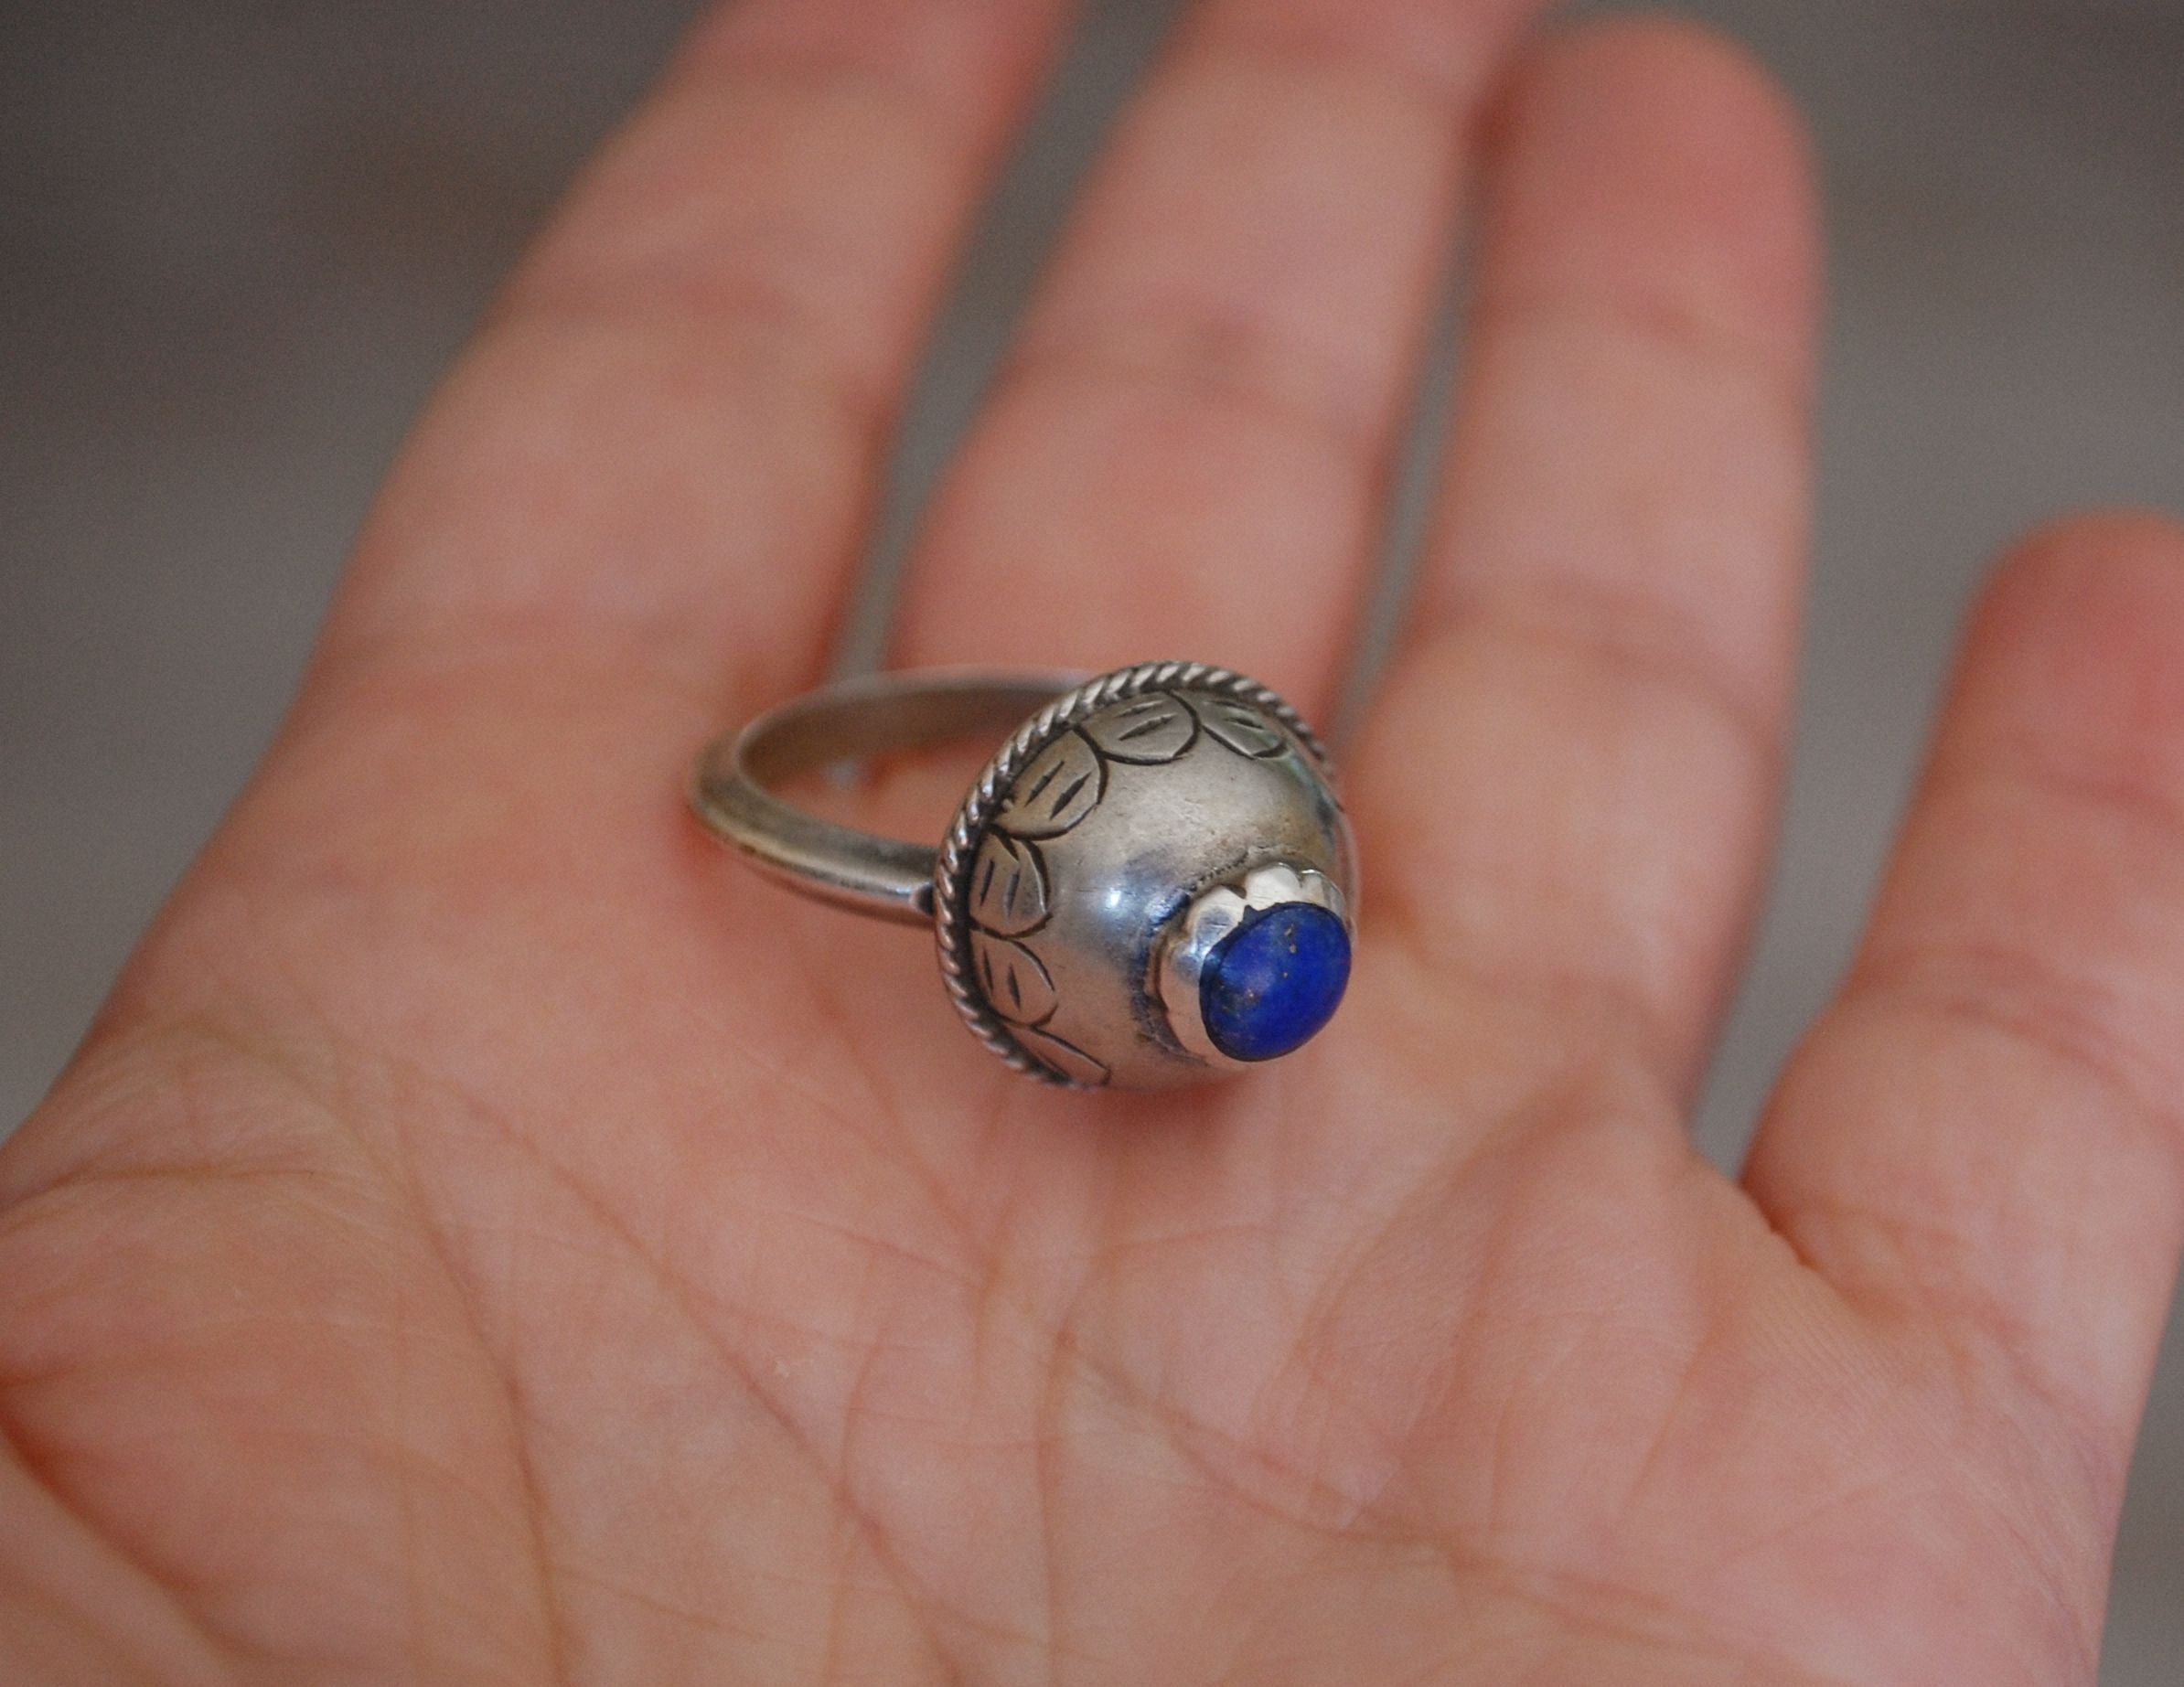 Vintage Afghani Lapis Lazuli Ring - Size 9